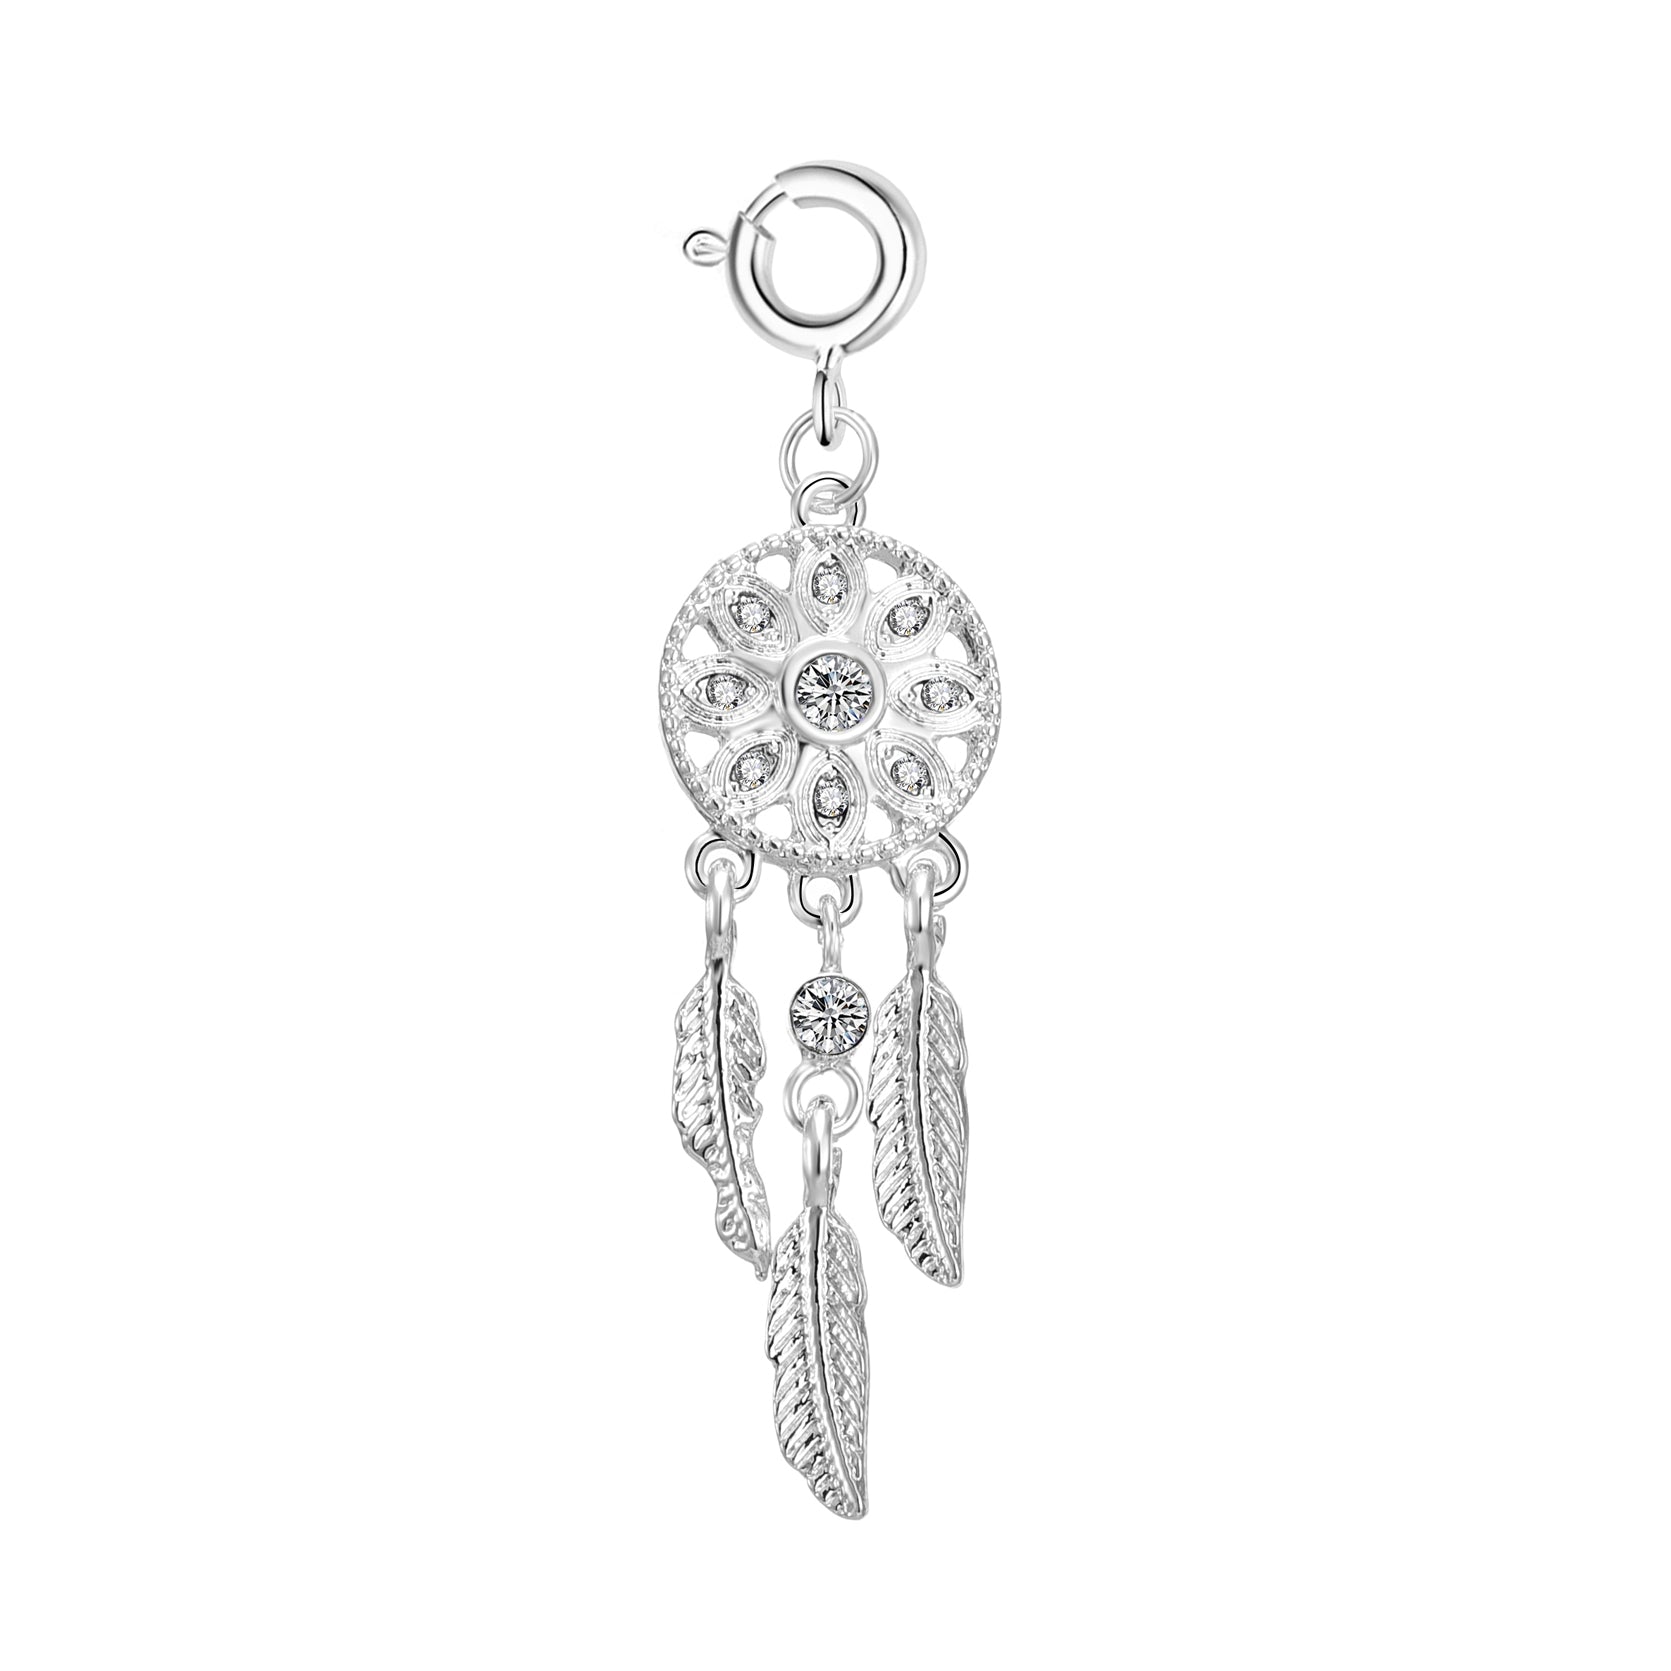 Dream Catcher Charm Created with Zircondia® Crystals by Philip Jones Jewellery